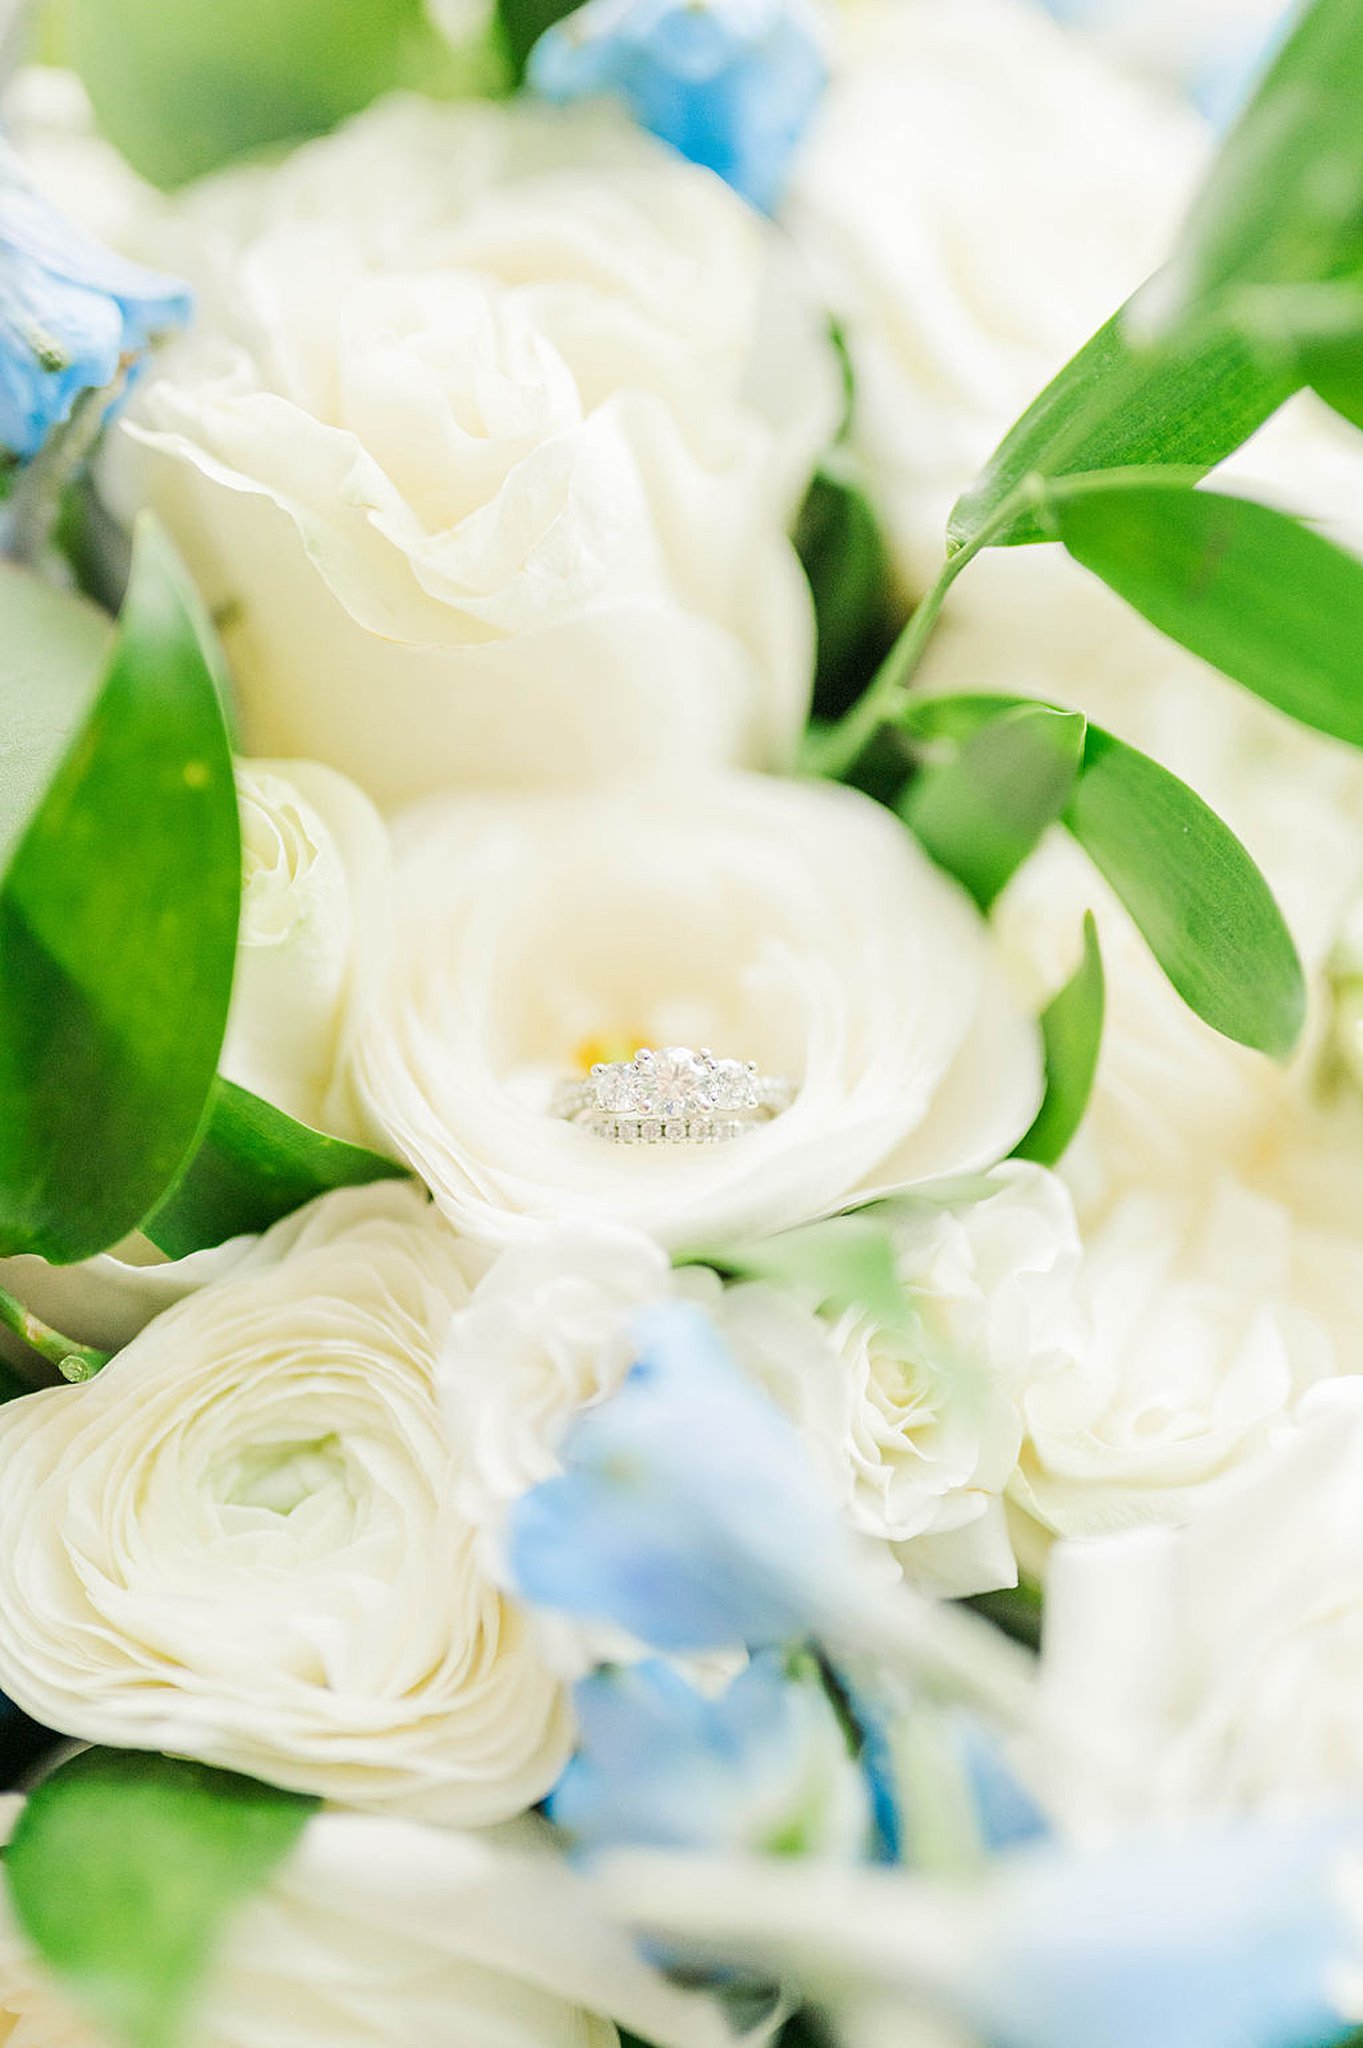 wedding rings sit inside a rose